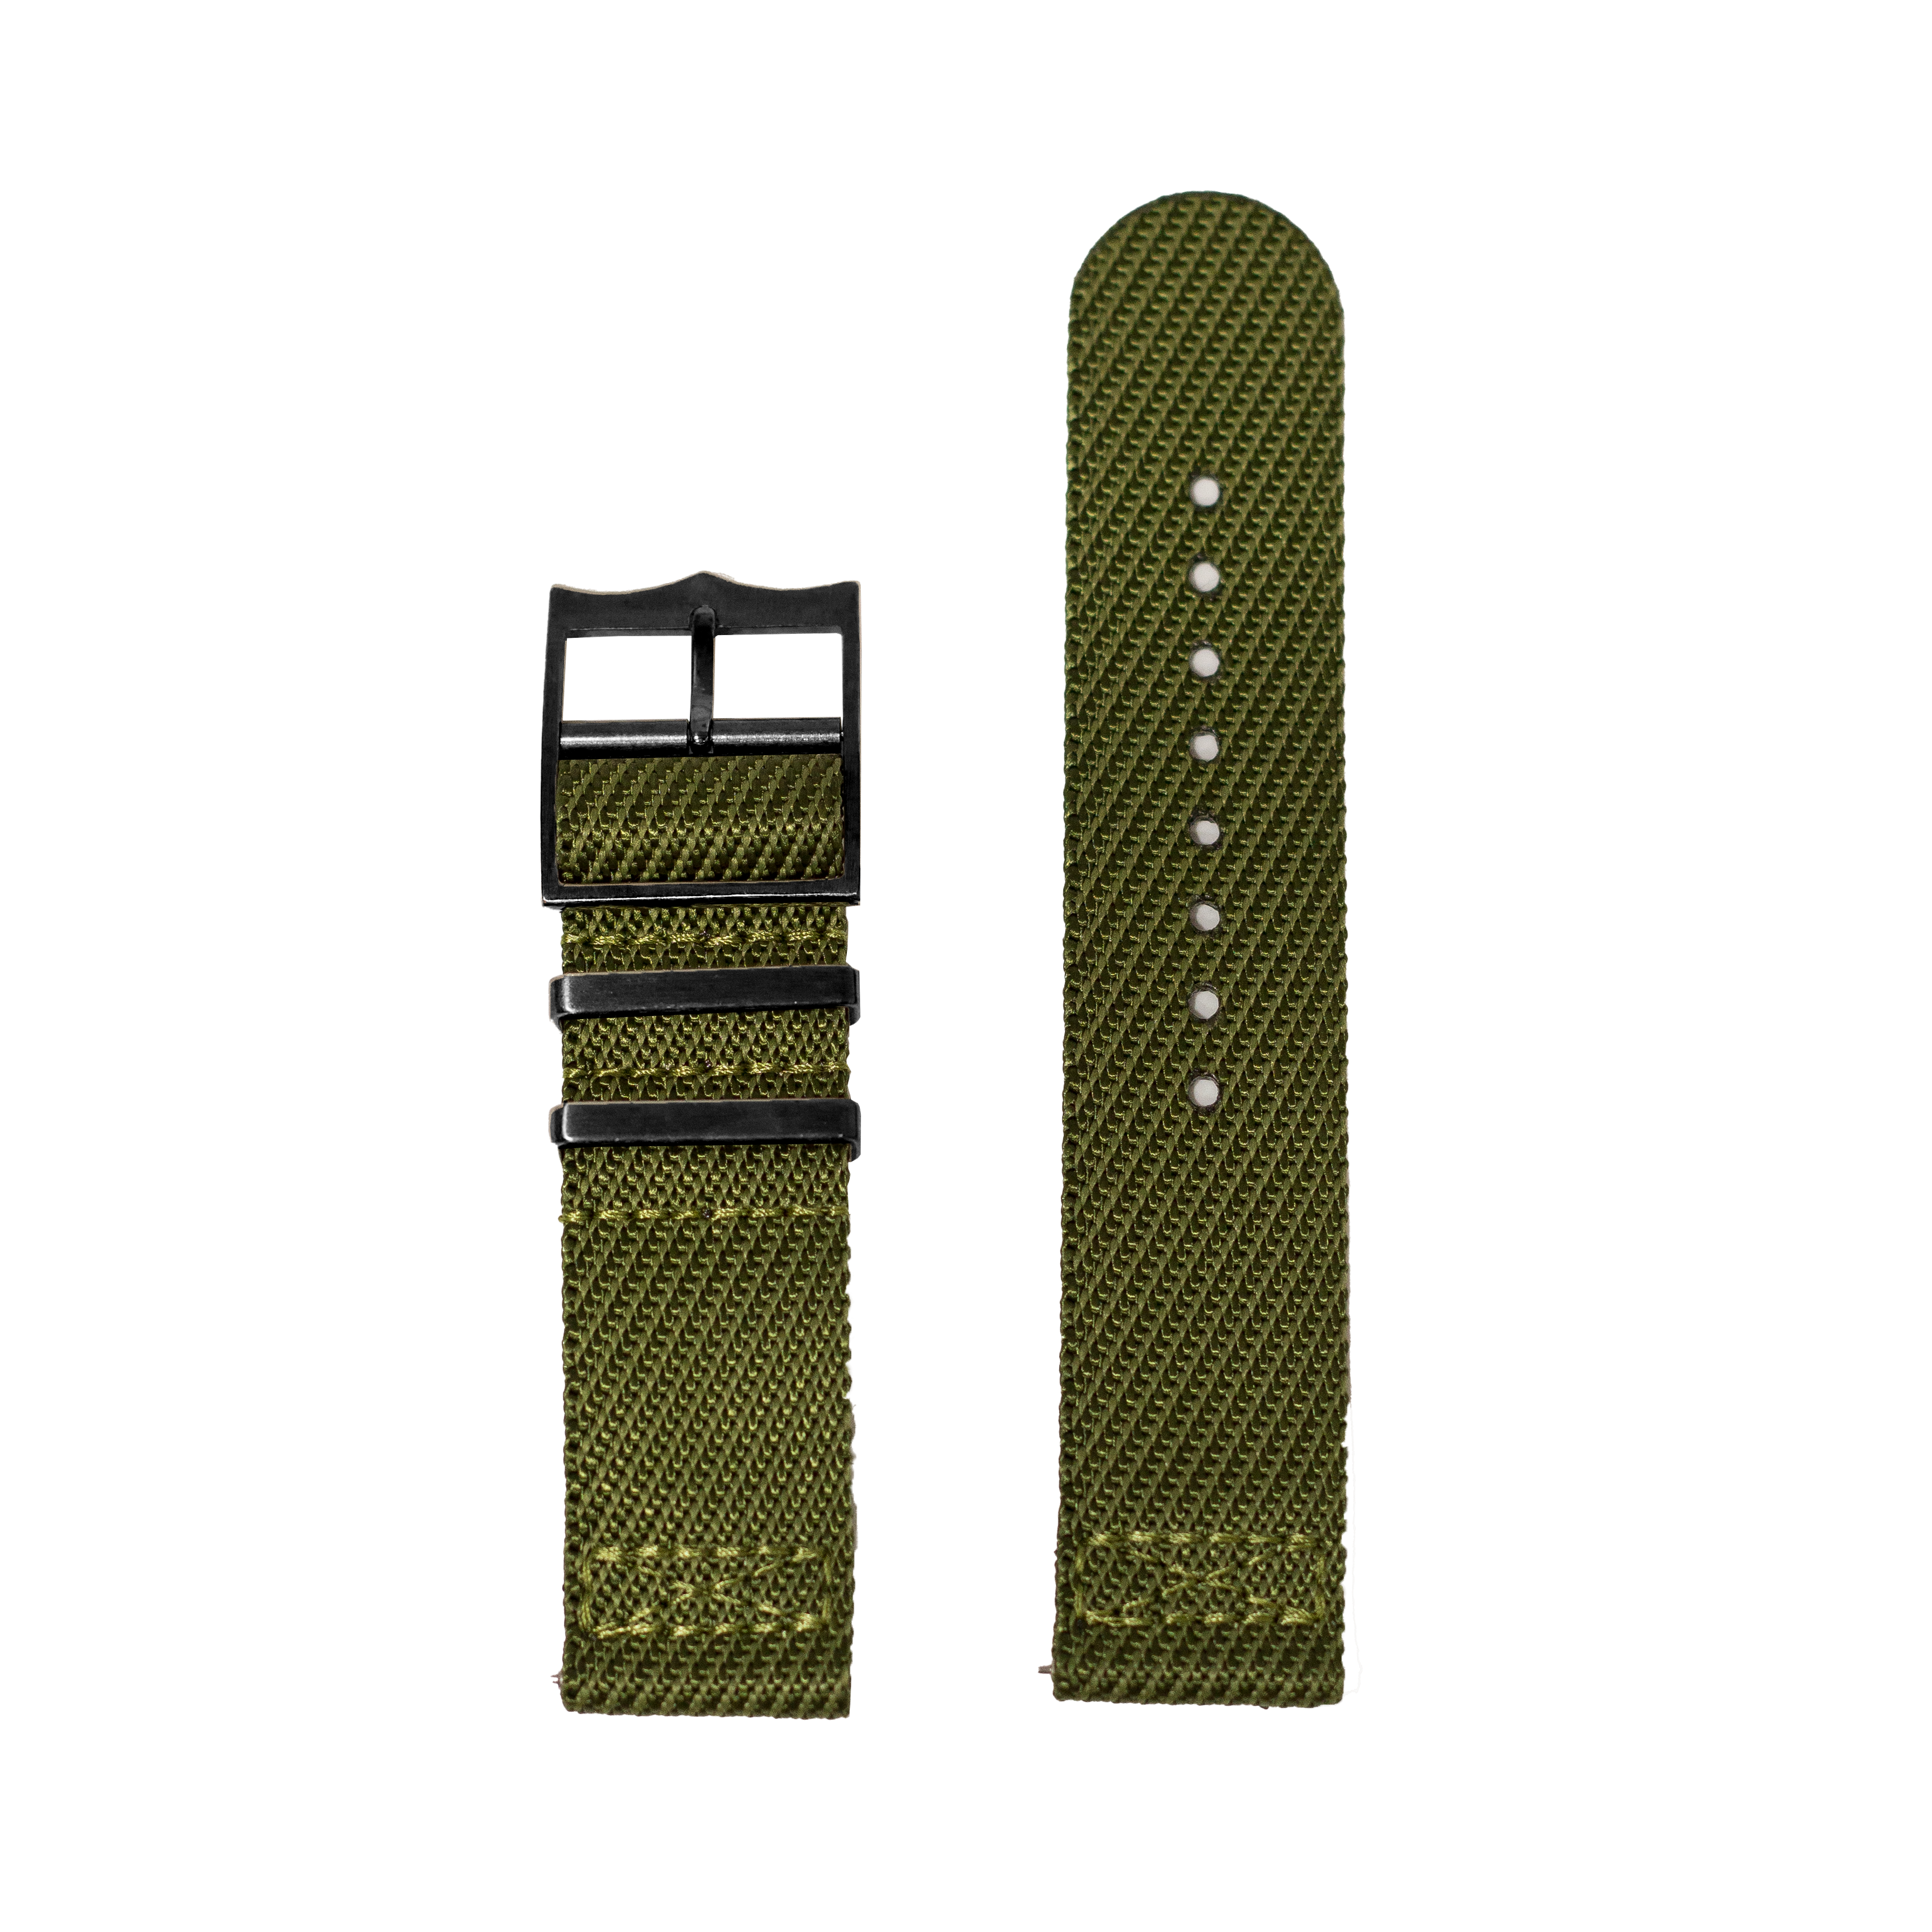 [Quick Release] Cross Militex - Army Green [Black Hardware]